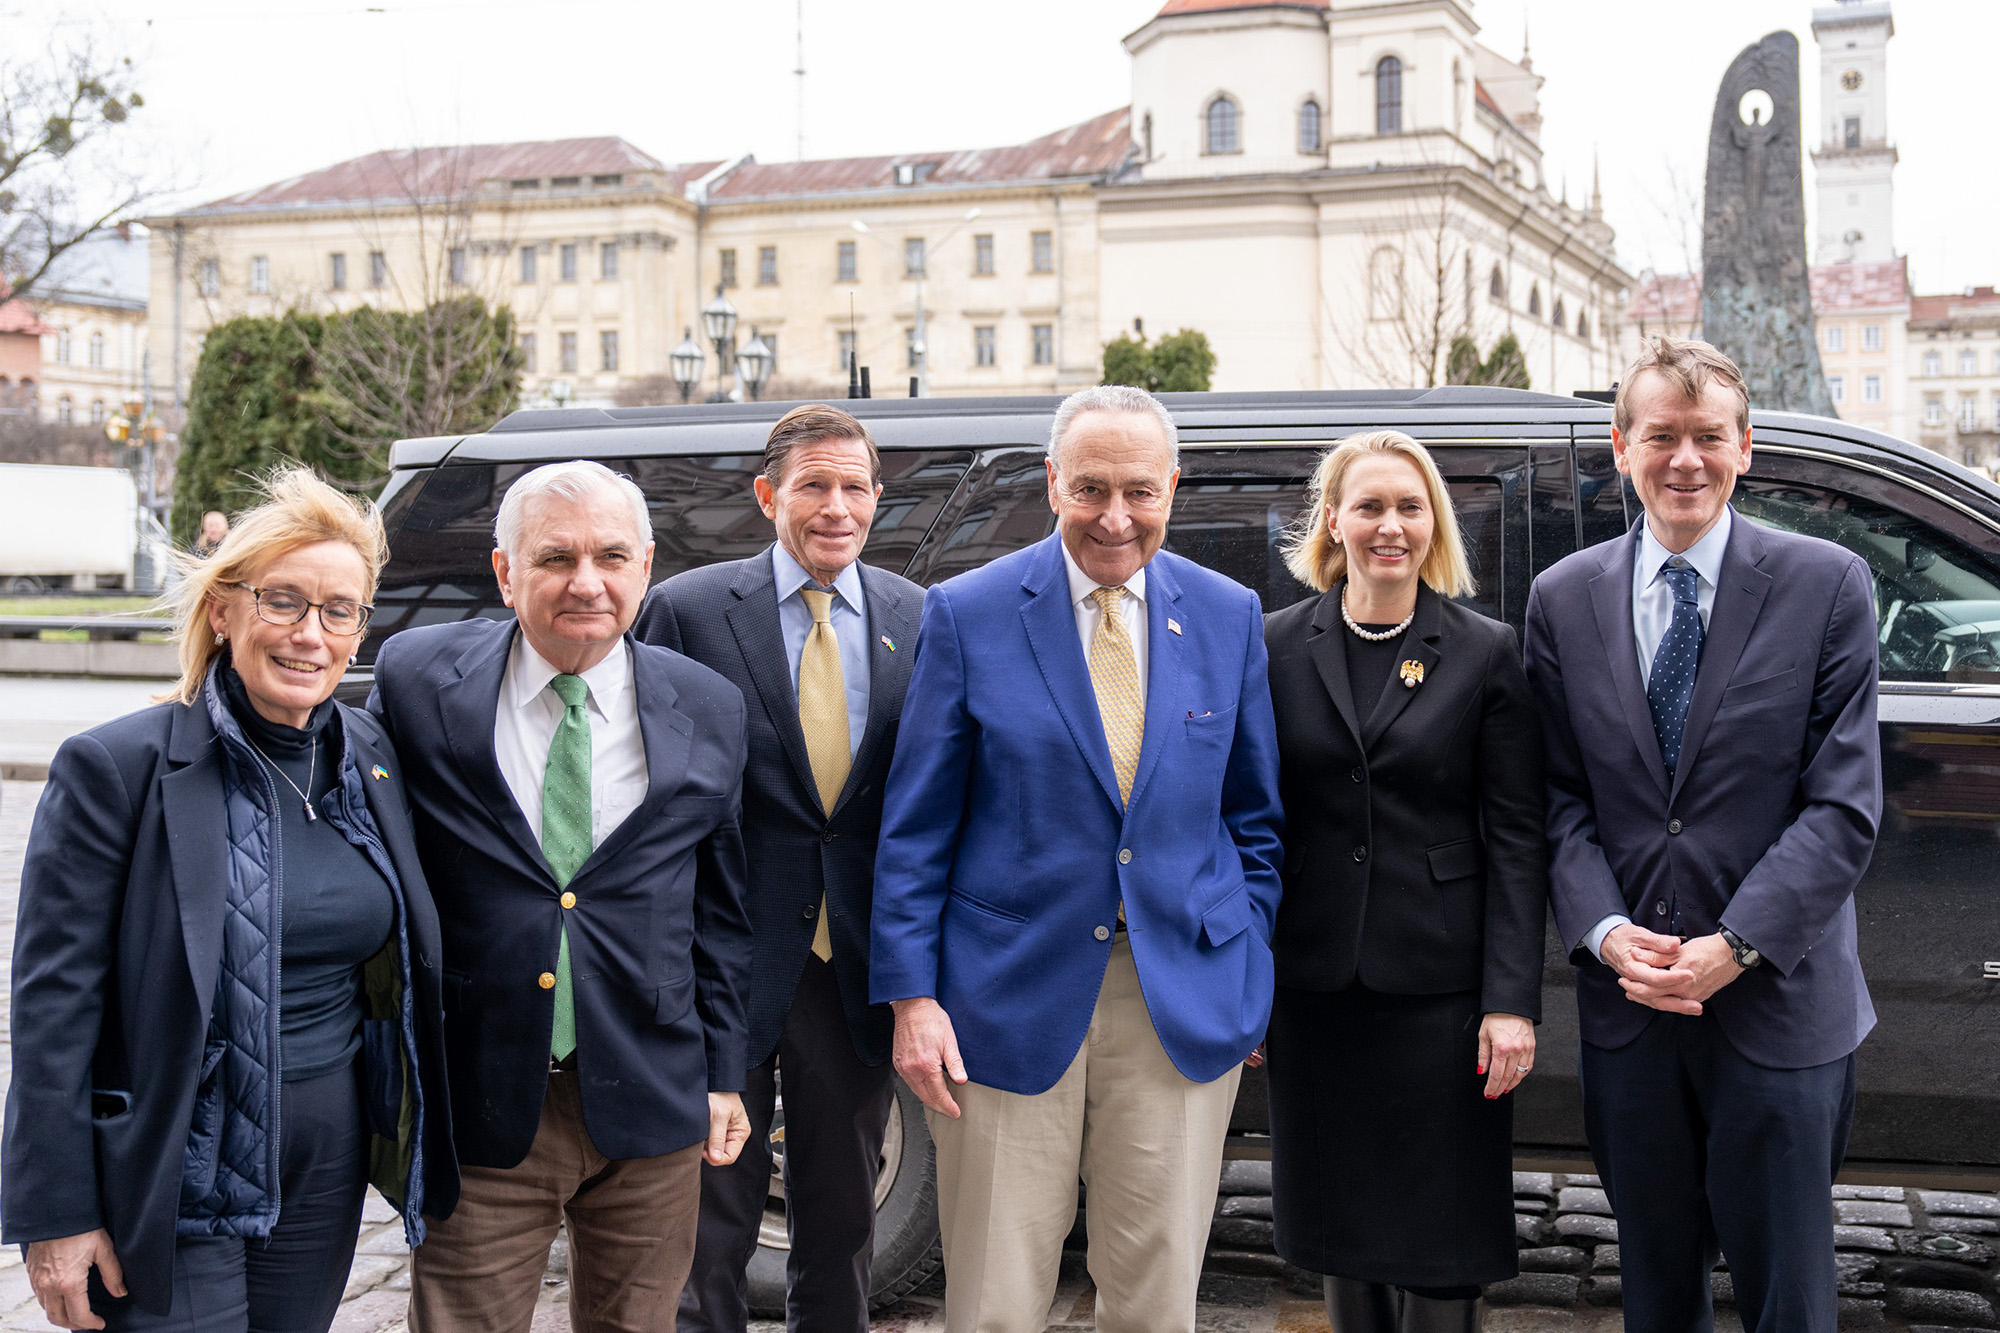 Senator Chuck Schumer, center, leads Congressional delegation to Ukraine to mark two-year anniversary of Russian invasion in Lviv, Ukraine, on February 23.